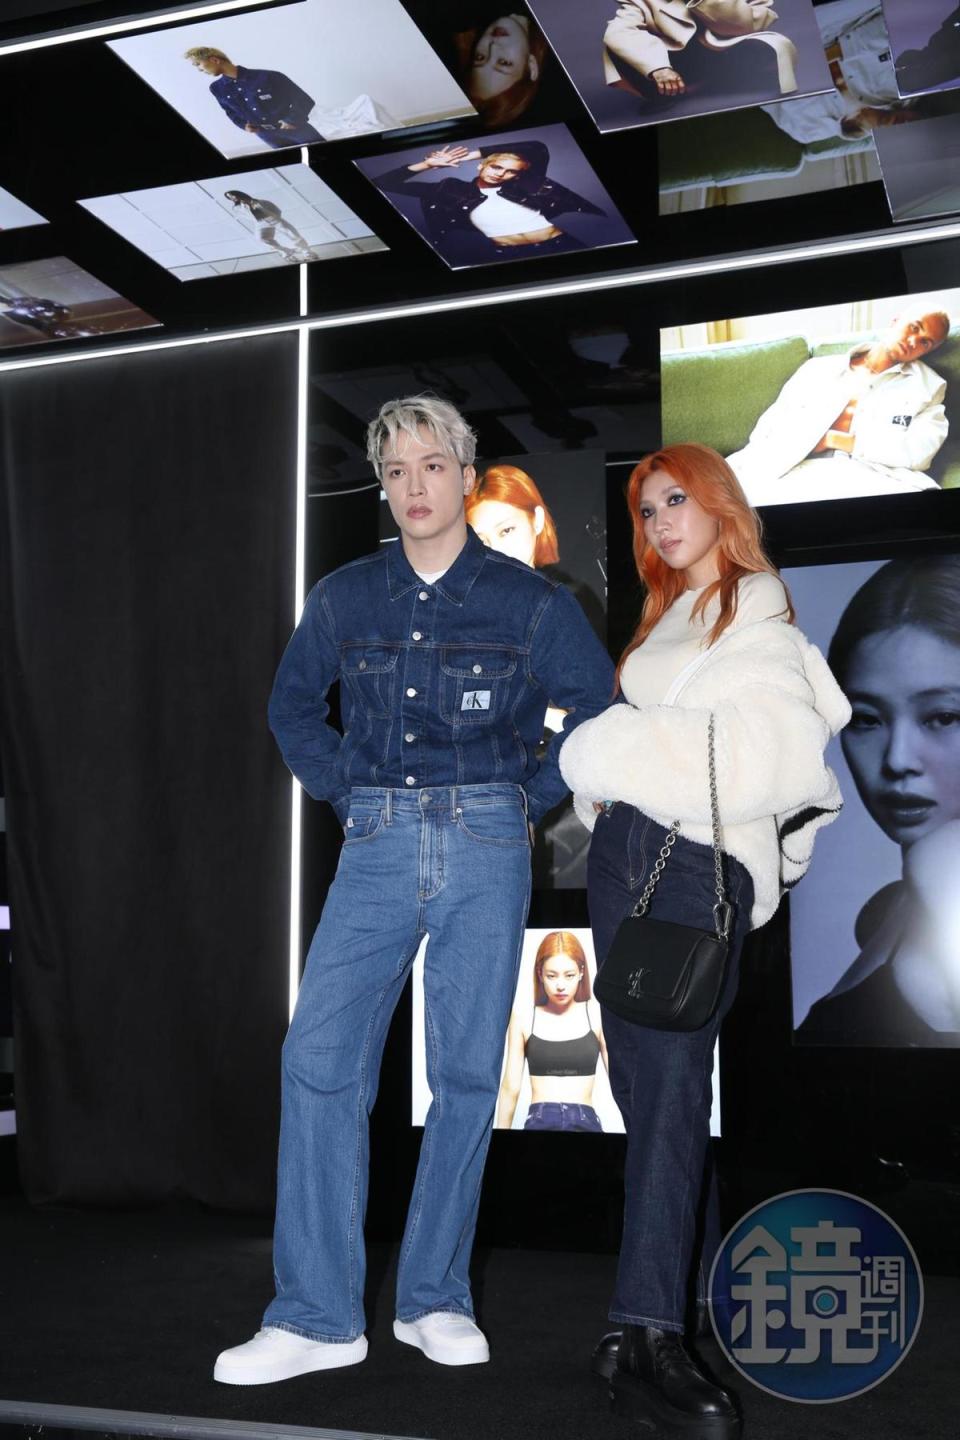 Karencici（右）、 J.Sheon（左）現身Calvin Klein丹寧快閃店的數位互動體驗區。